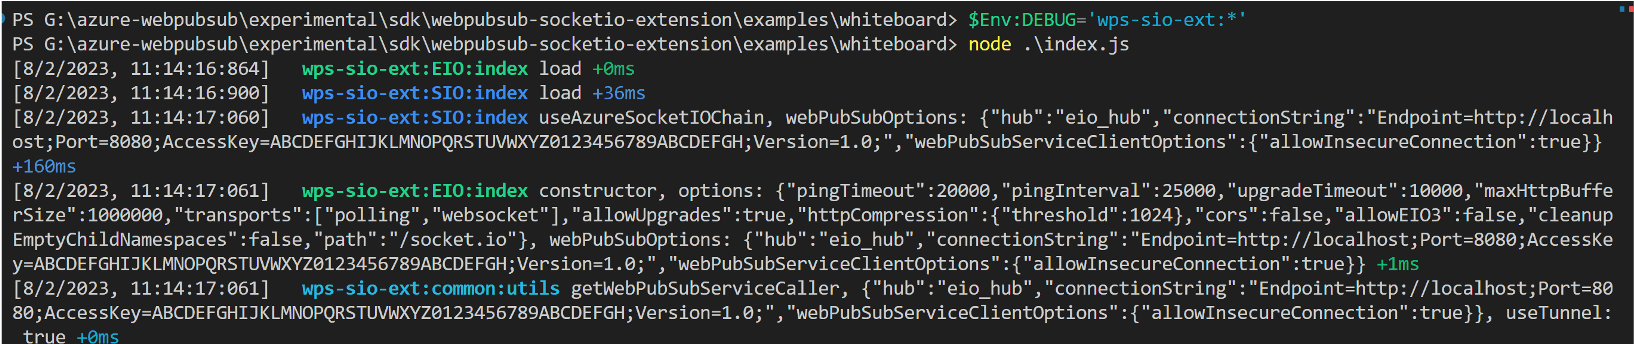 Screenshot of logging information from DEBUG JavaScript utility